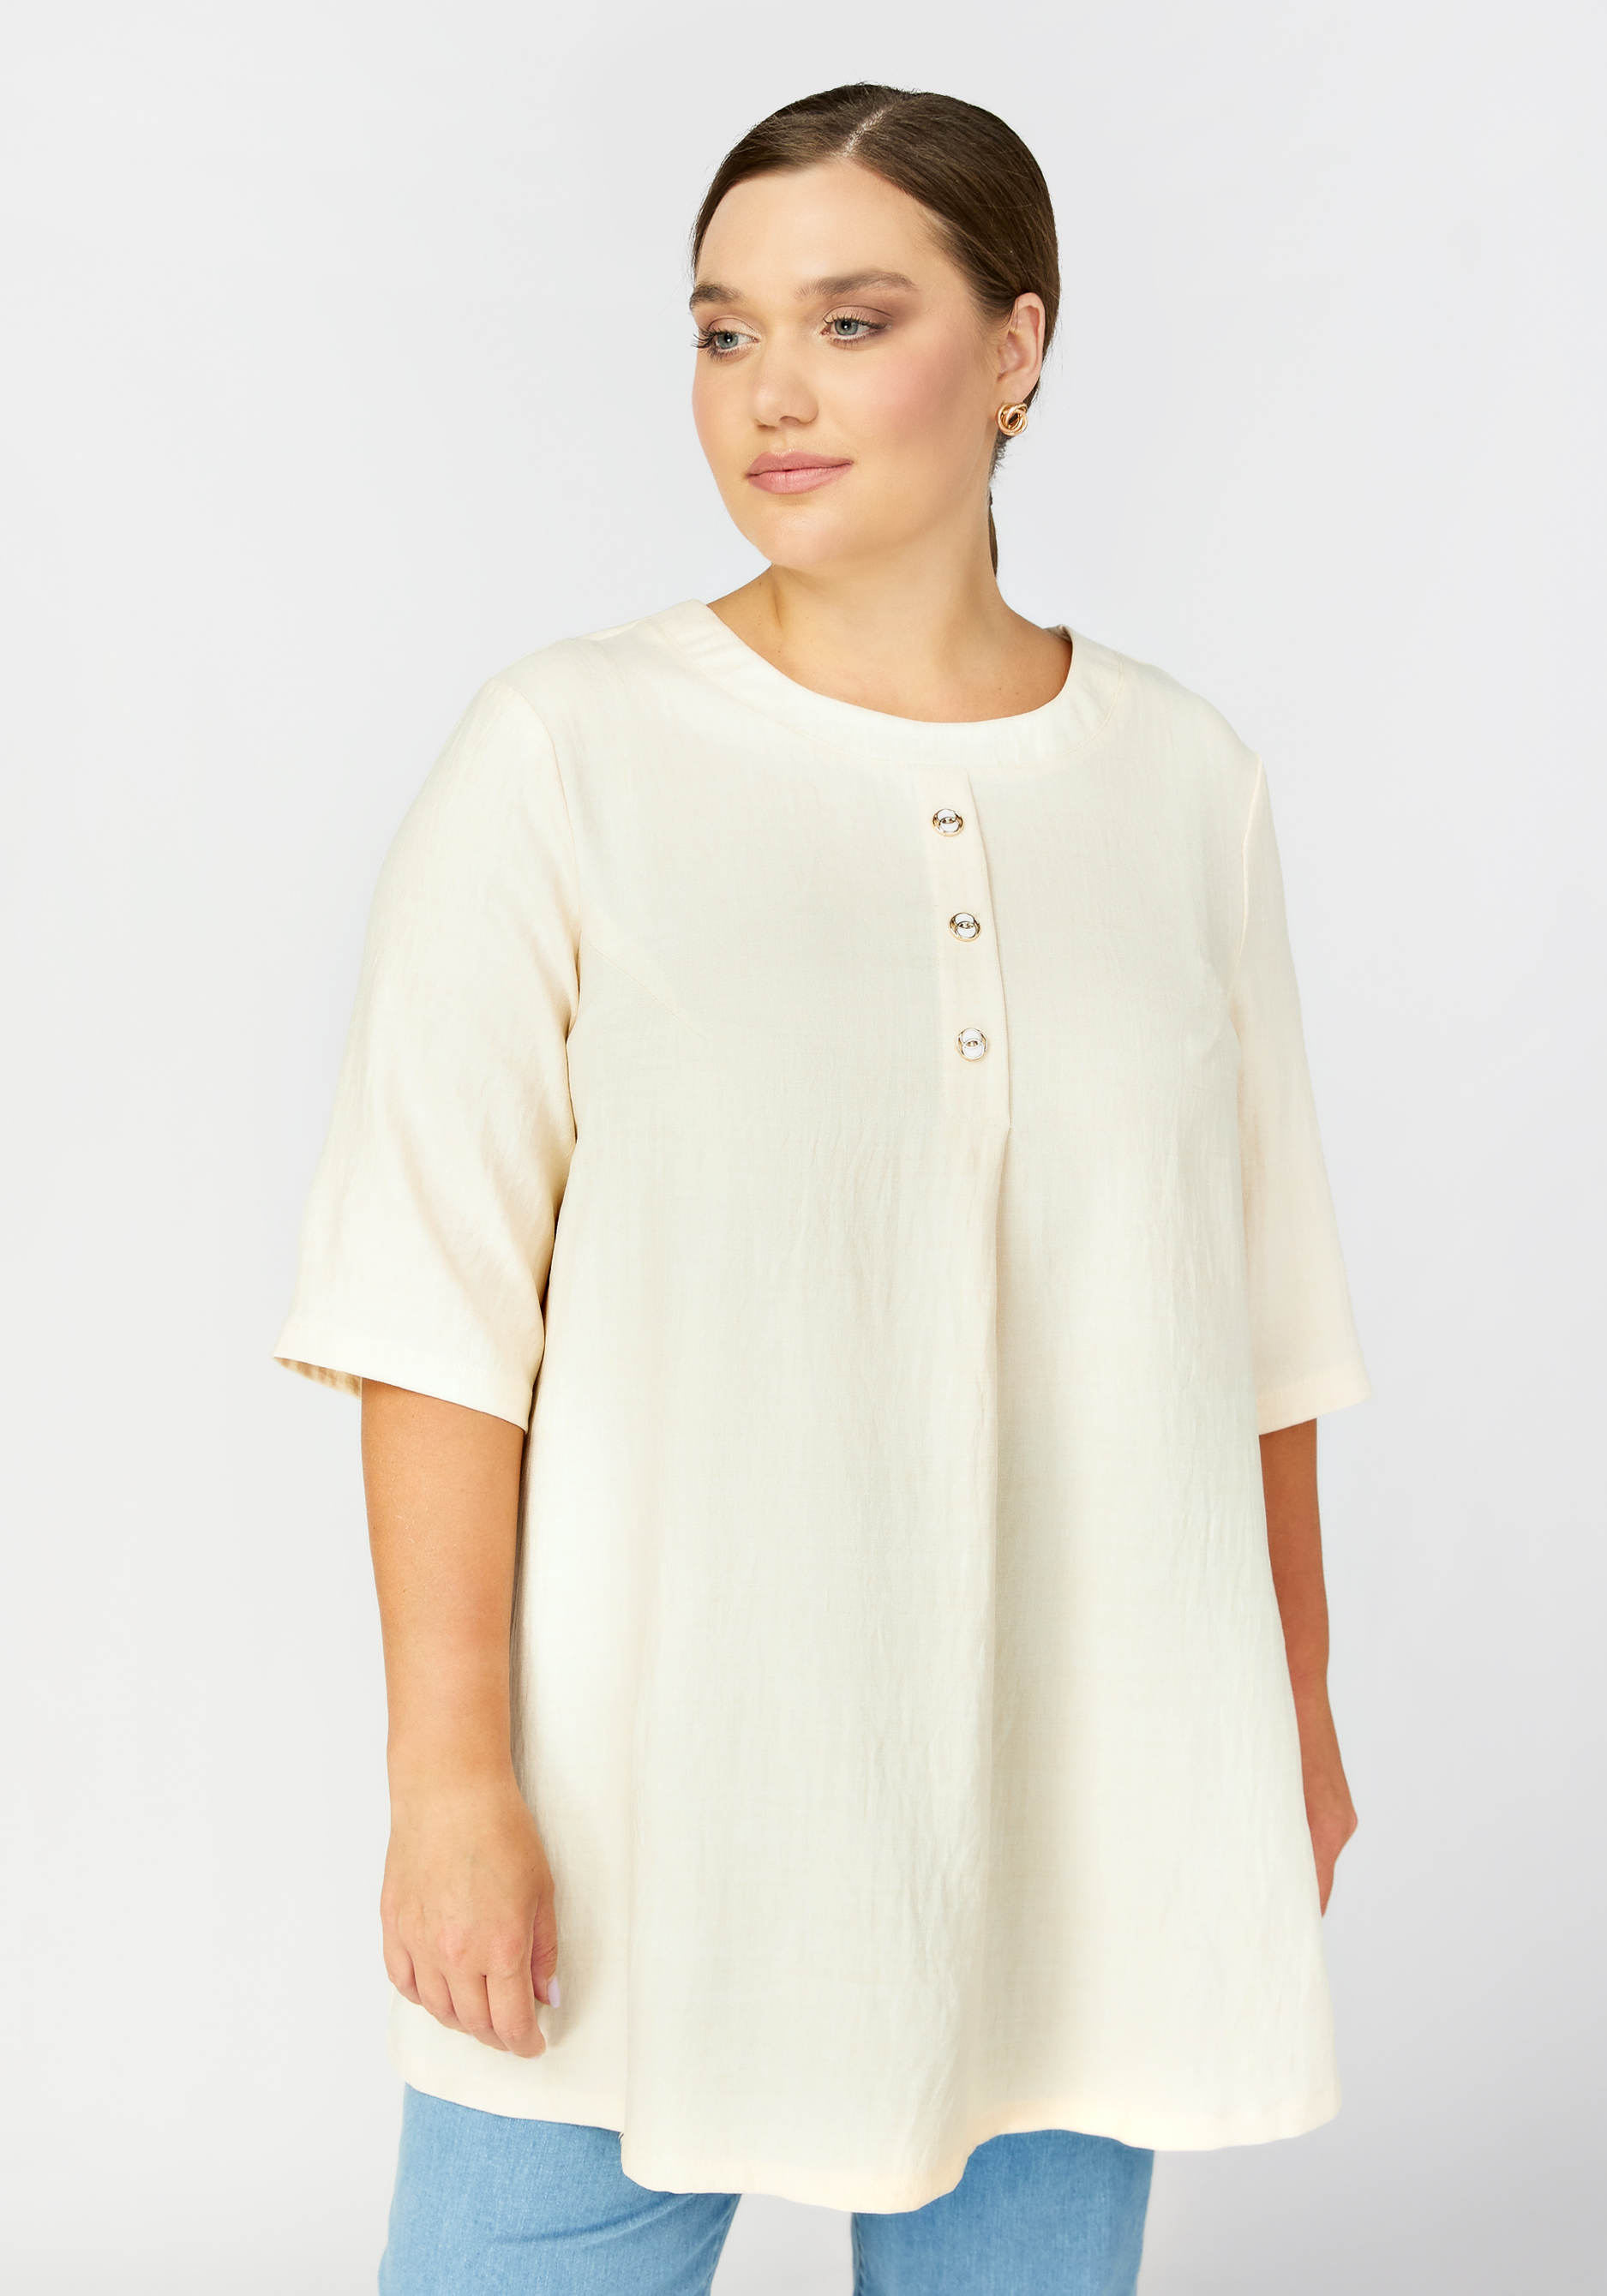 Блуза с планкой на пуговицах жен блуза силви белый р 48